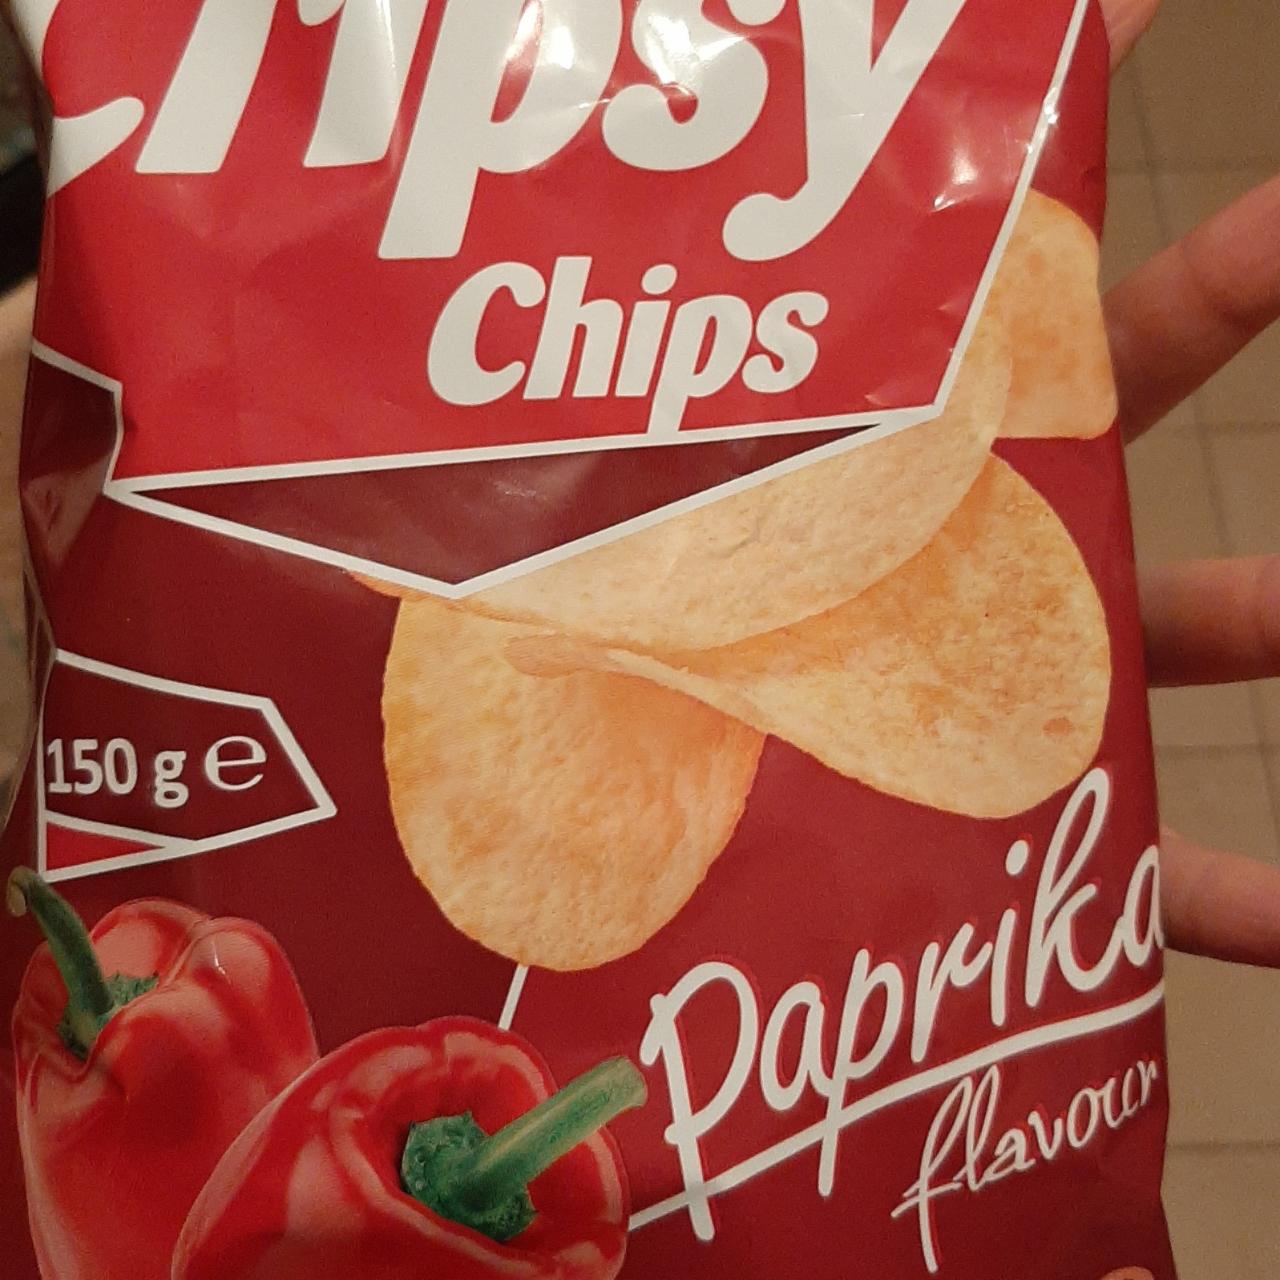 Zdjęcia - Cripsy chips paprika